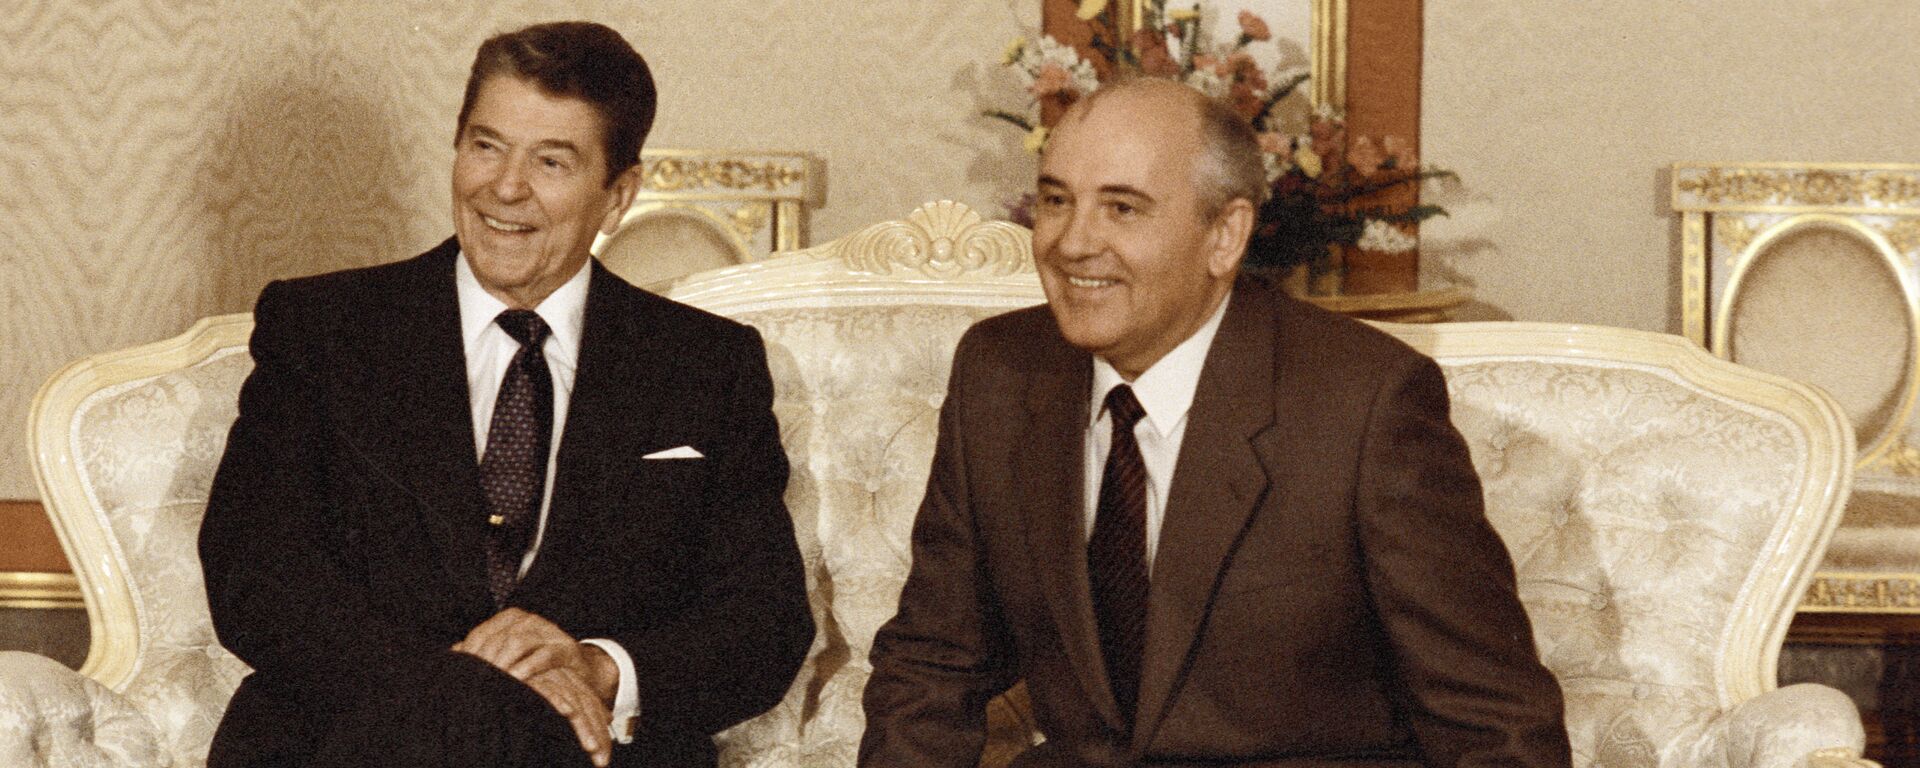 Reagan and Gorbachev - Sputnik International, 1920, 12.12.2017